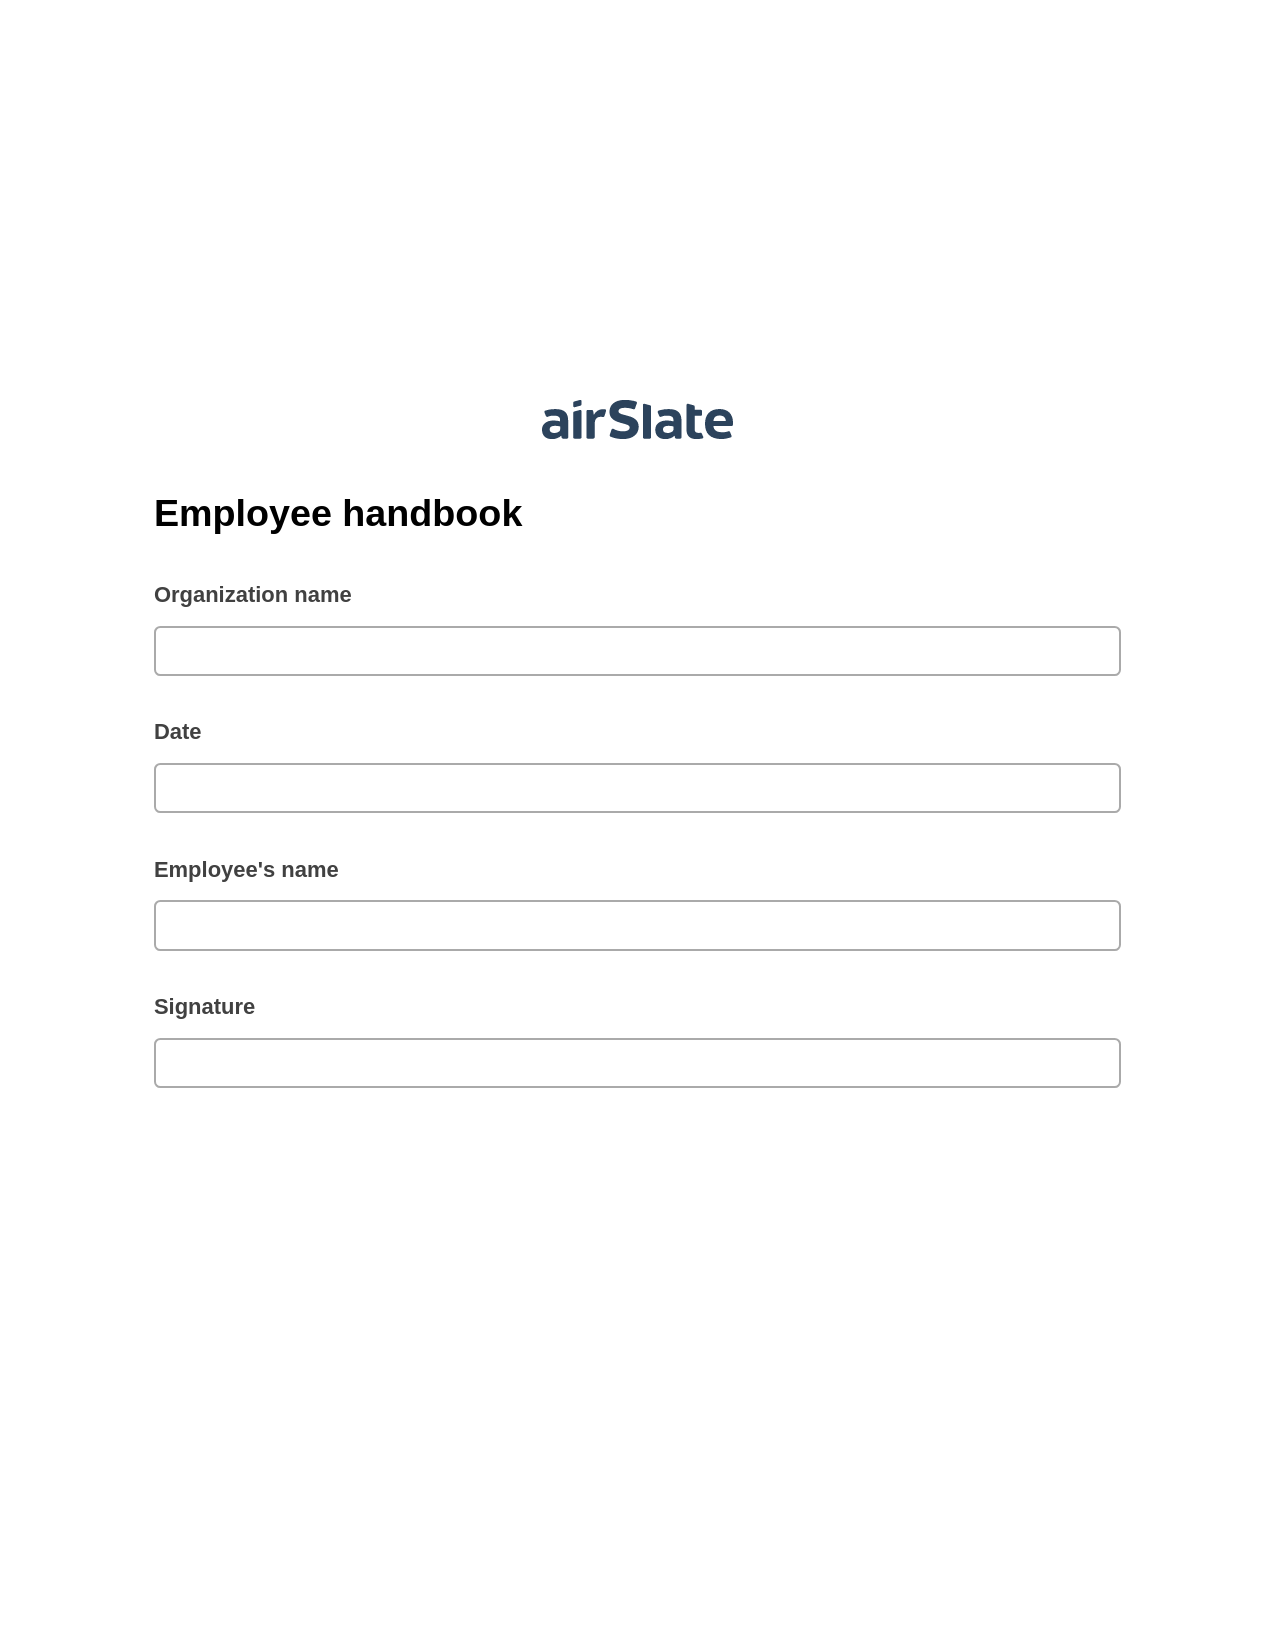 Employee handbook Pre-fill from MySQL Bot, Assign Slate Name Bot, Export to Google Sheet Bot